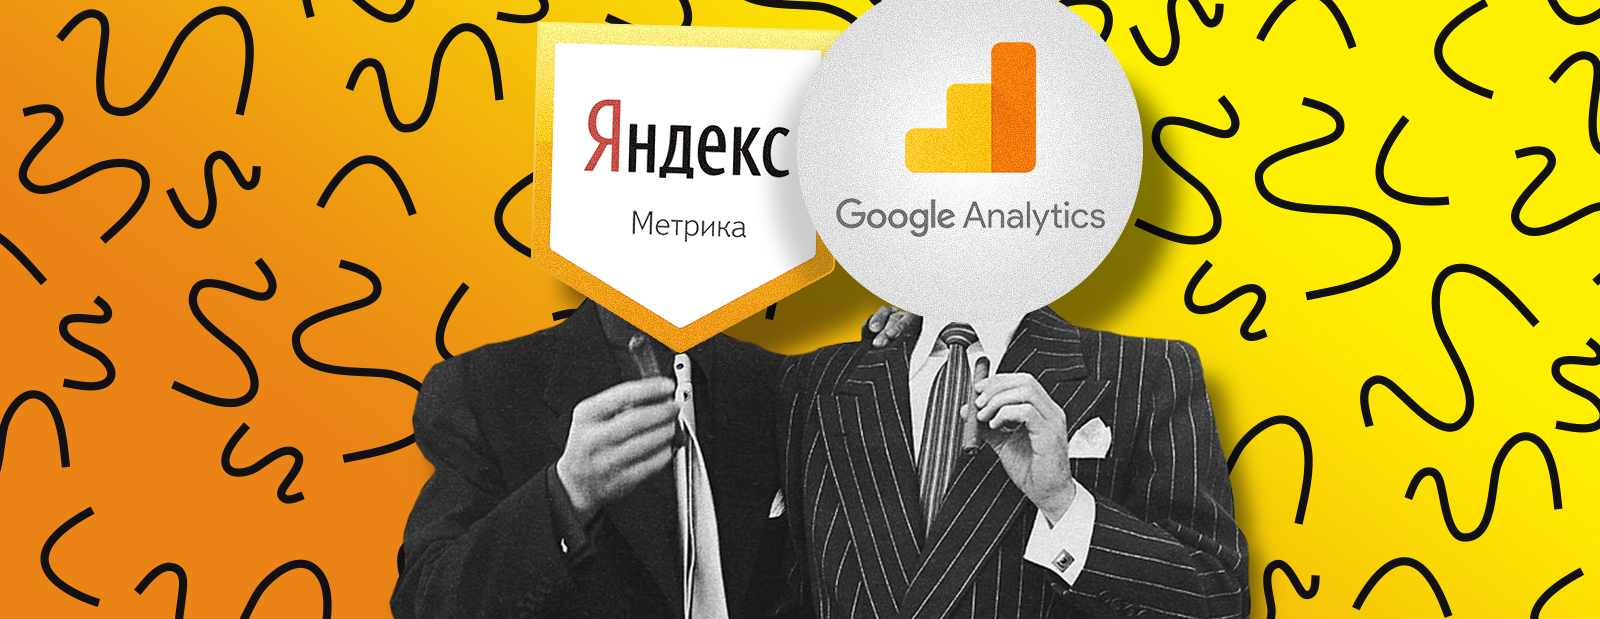 настройки аналитических систем Google Analytics, Яндекс Метрика